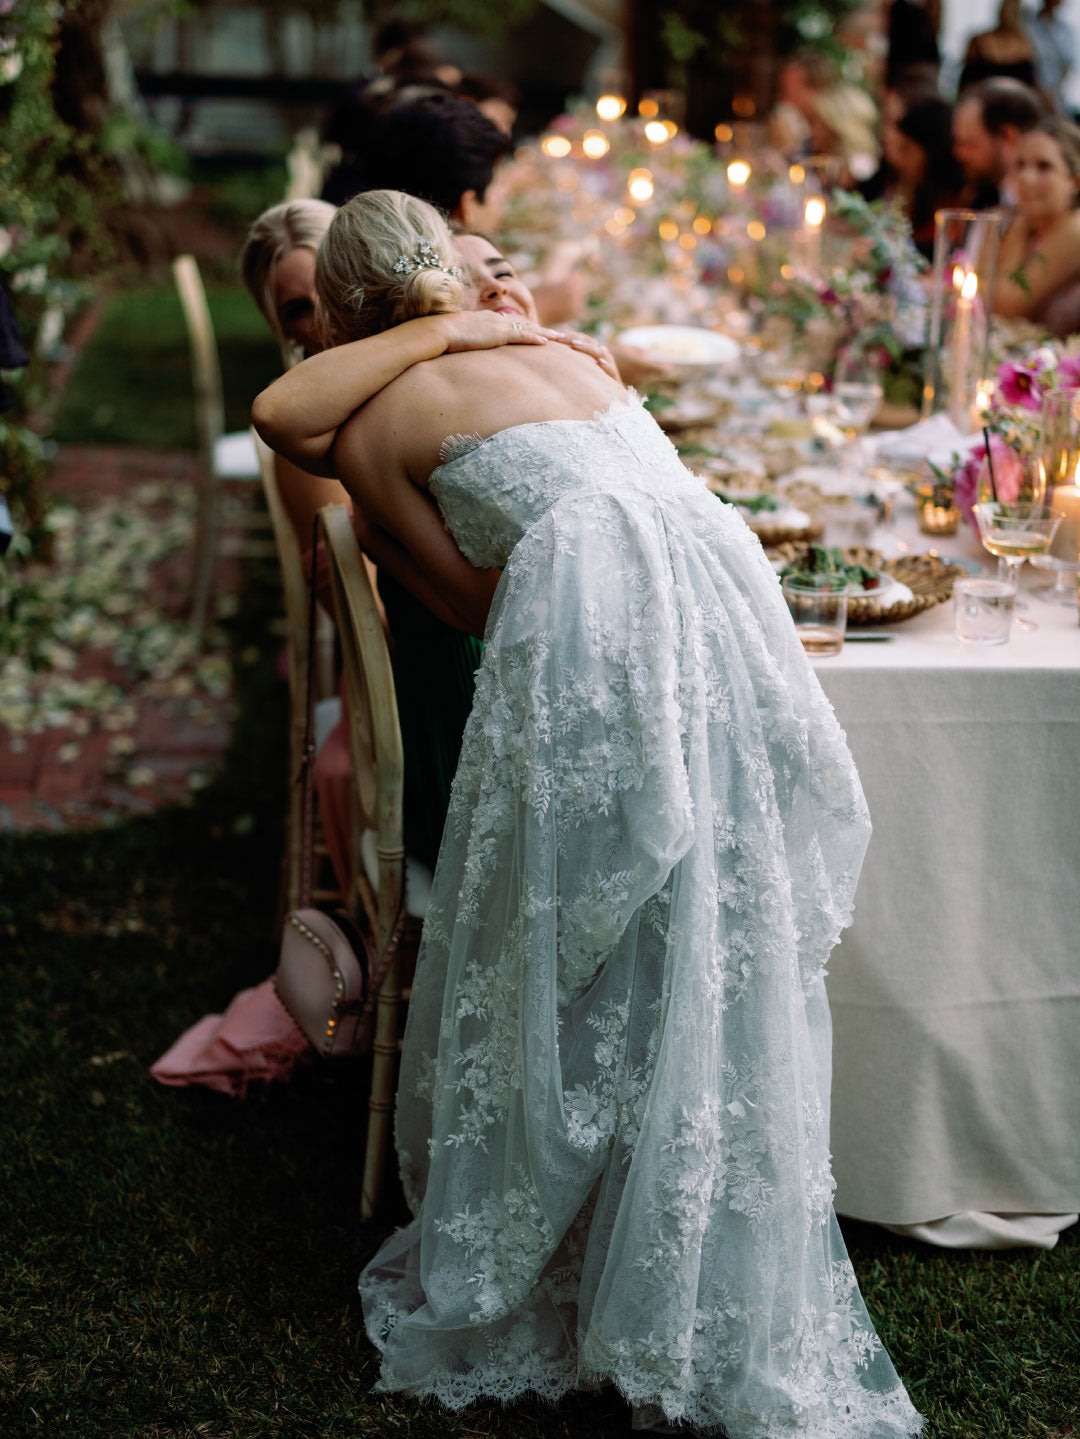 Bride Anais in wedding dress hugging guest